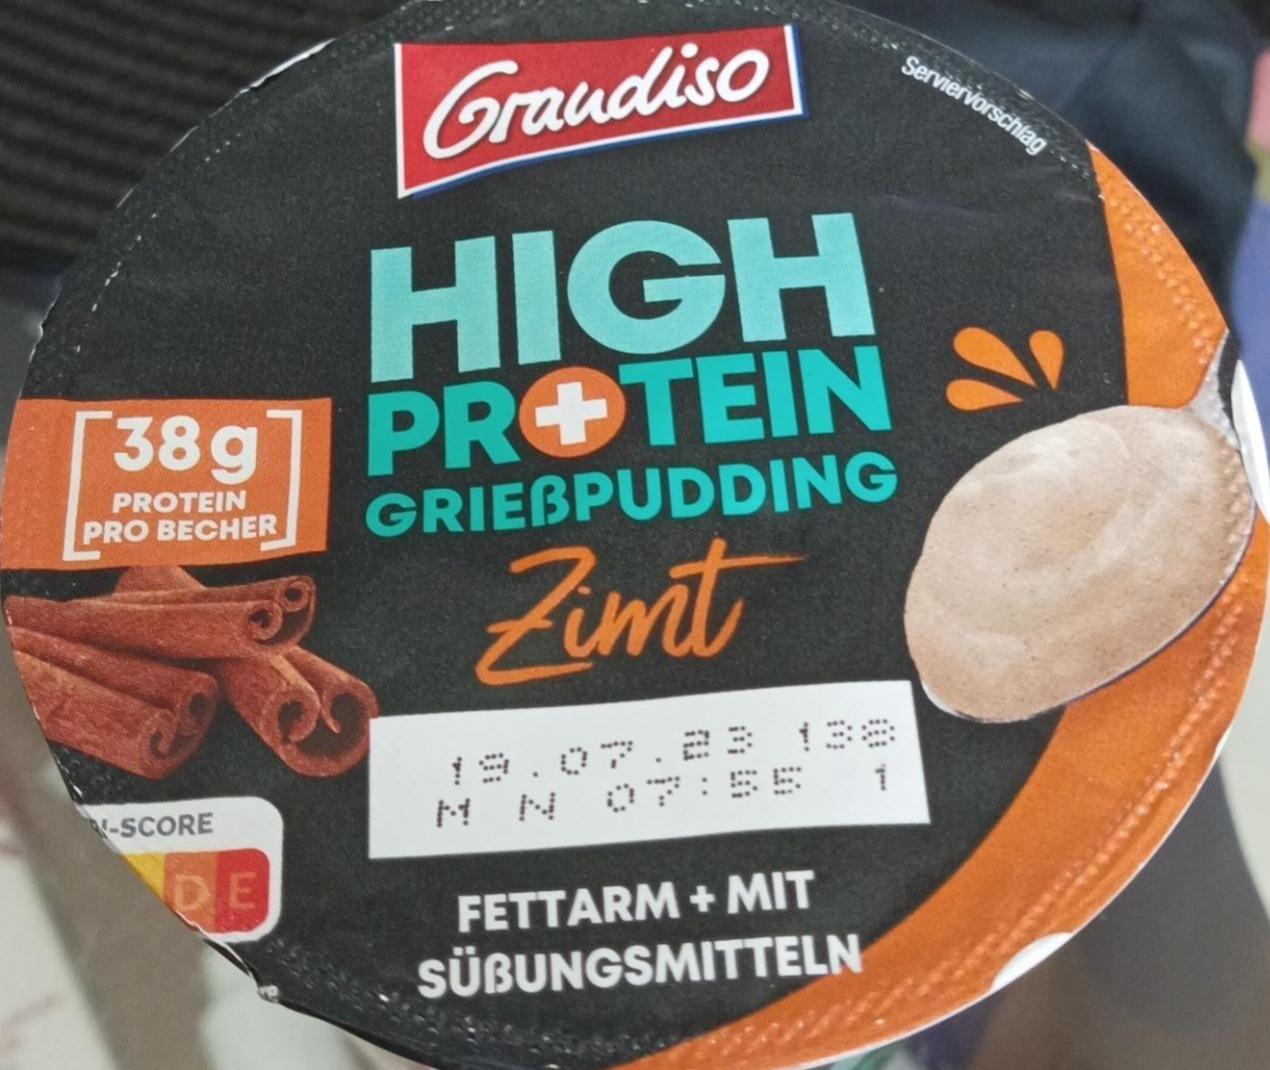 Фото - grießpudding high protein zimt graudiso